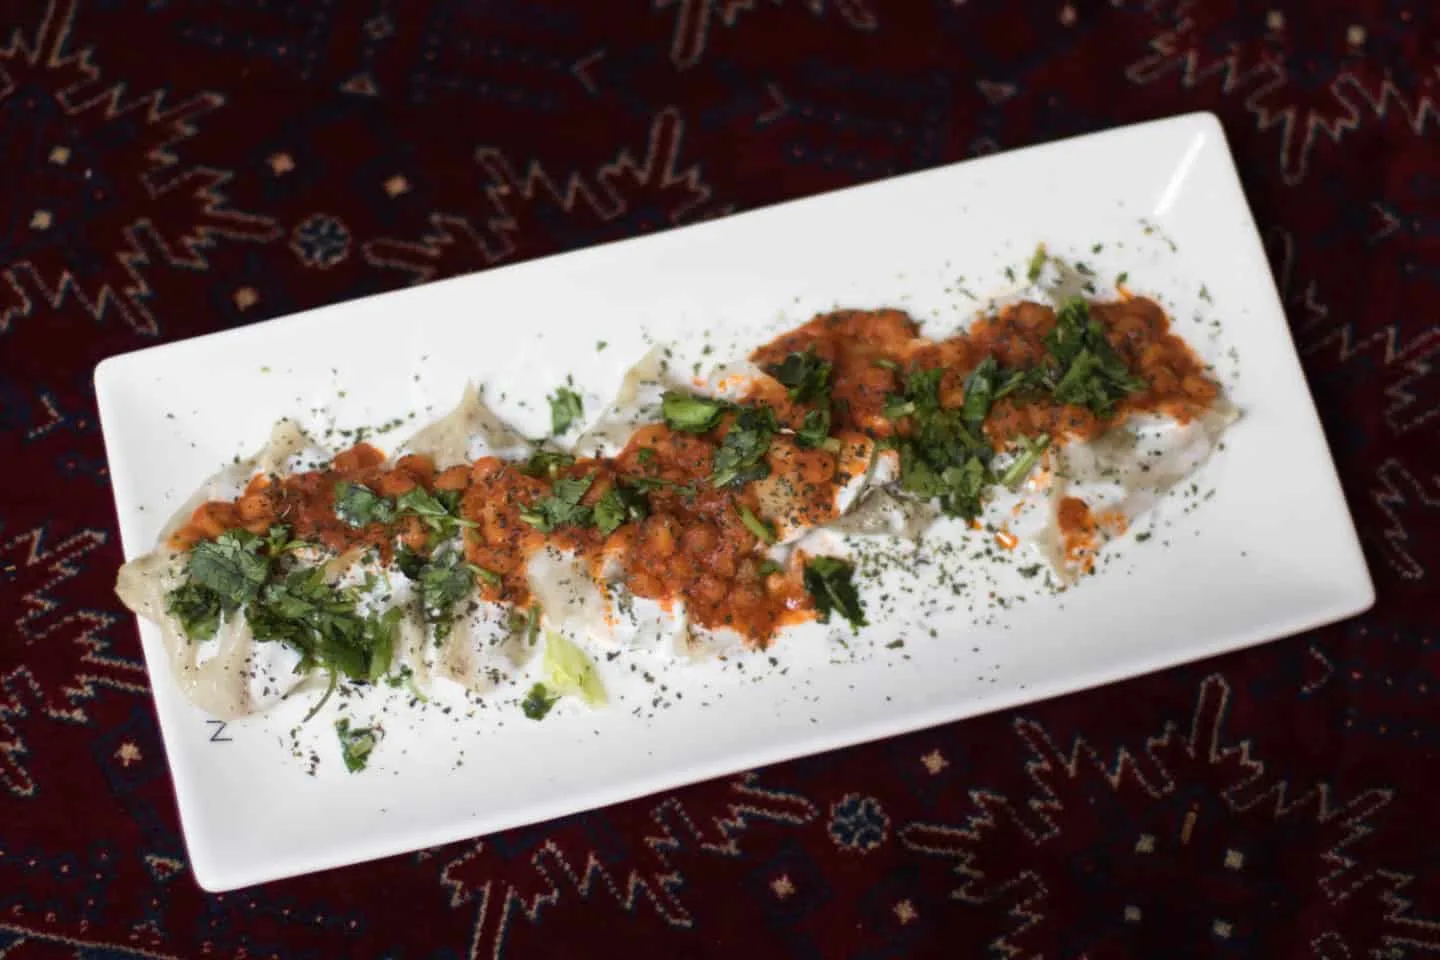 Naan & Kabob, one of the best Afghan restaurants in Toronto